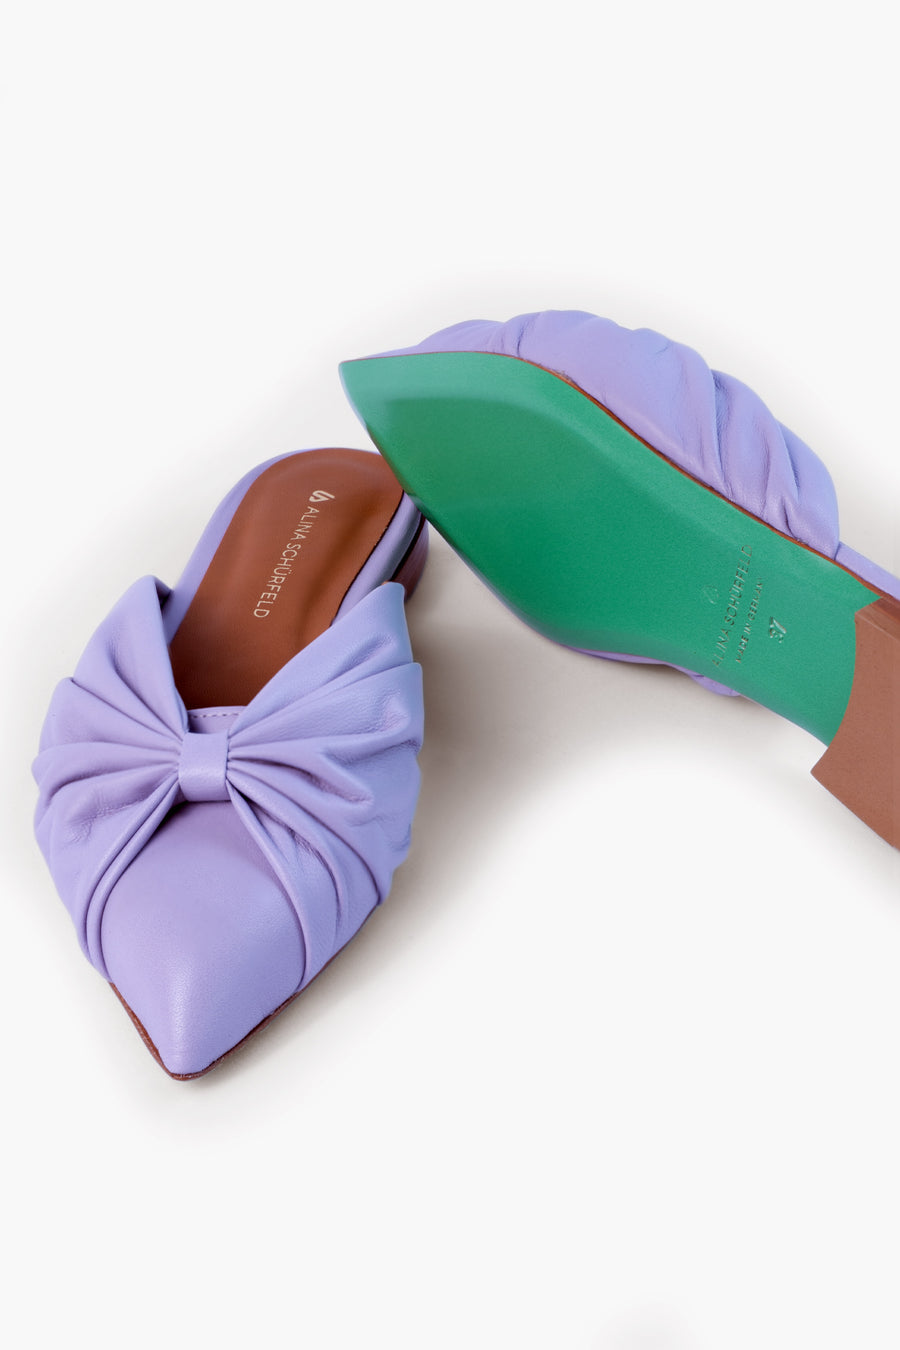 TILDA Plissee Slippers  | Made in Germany